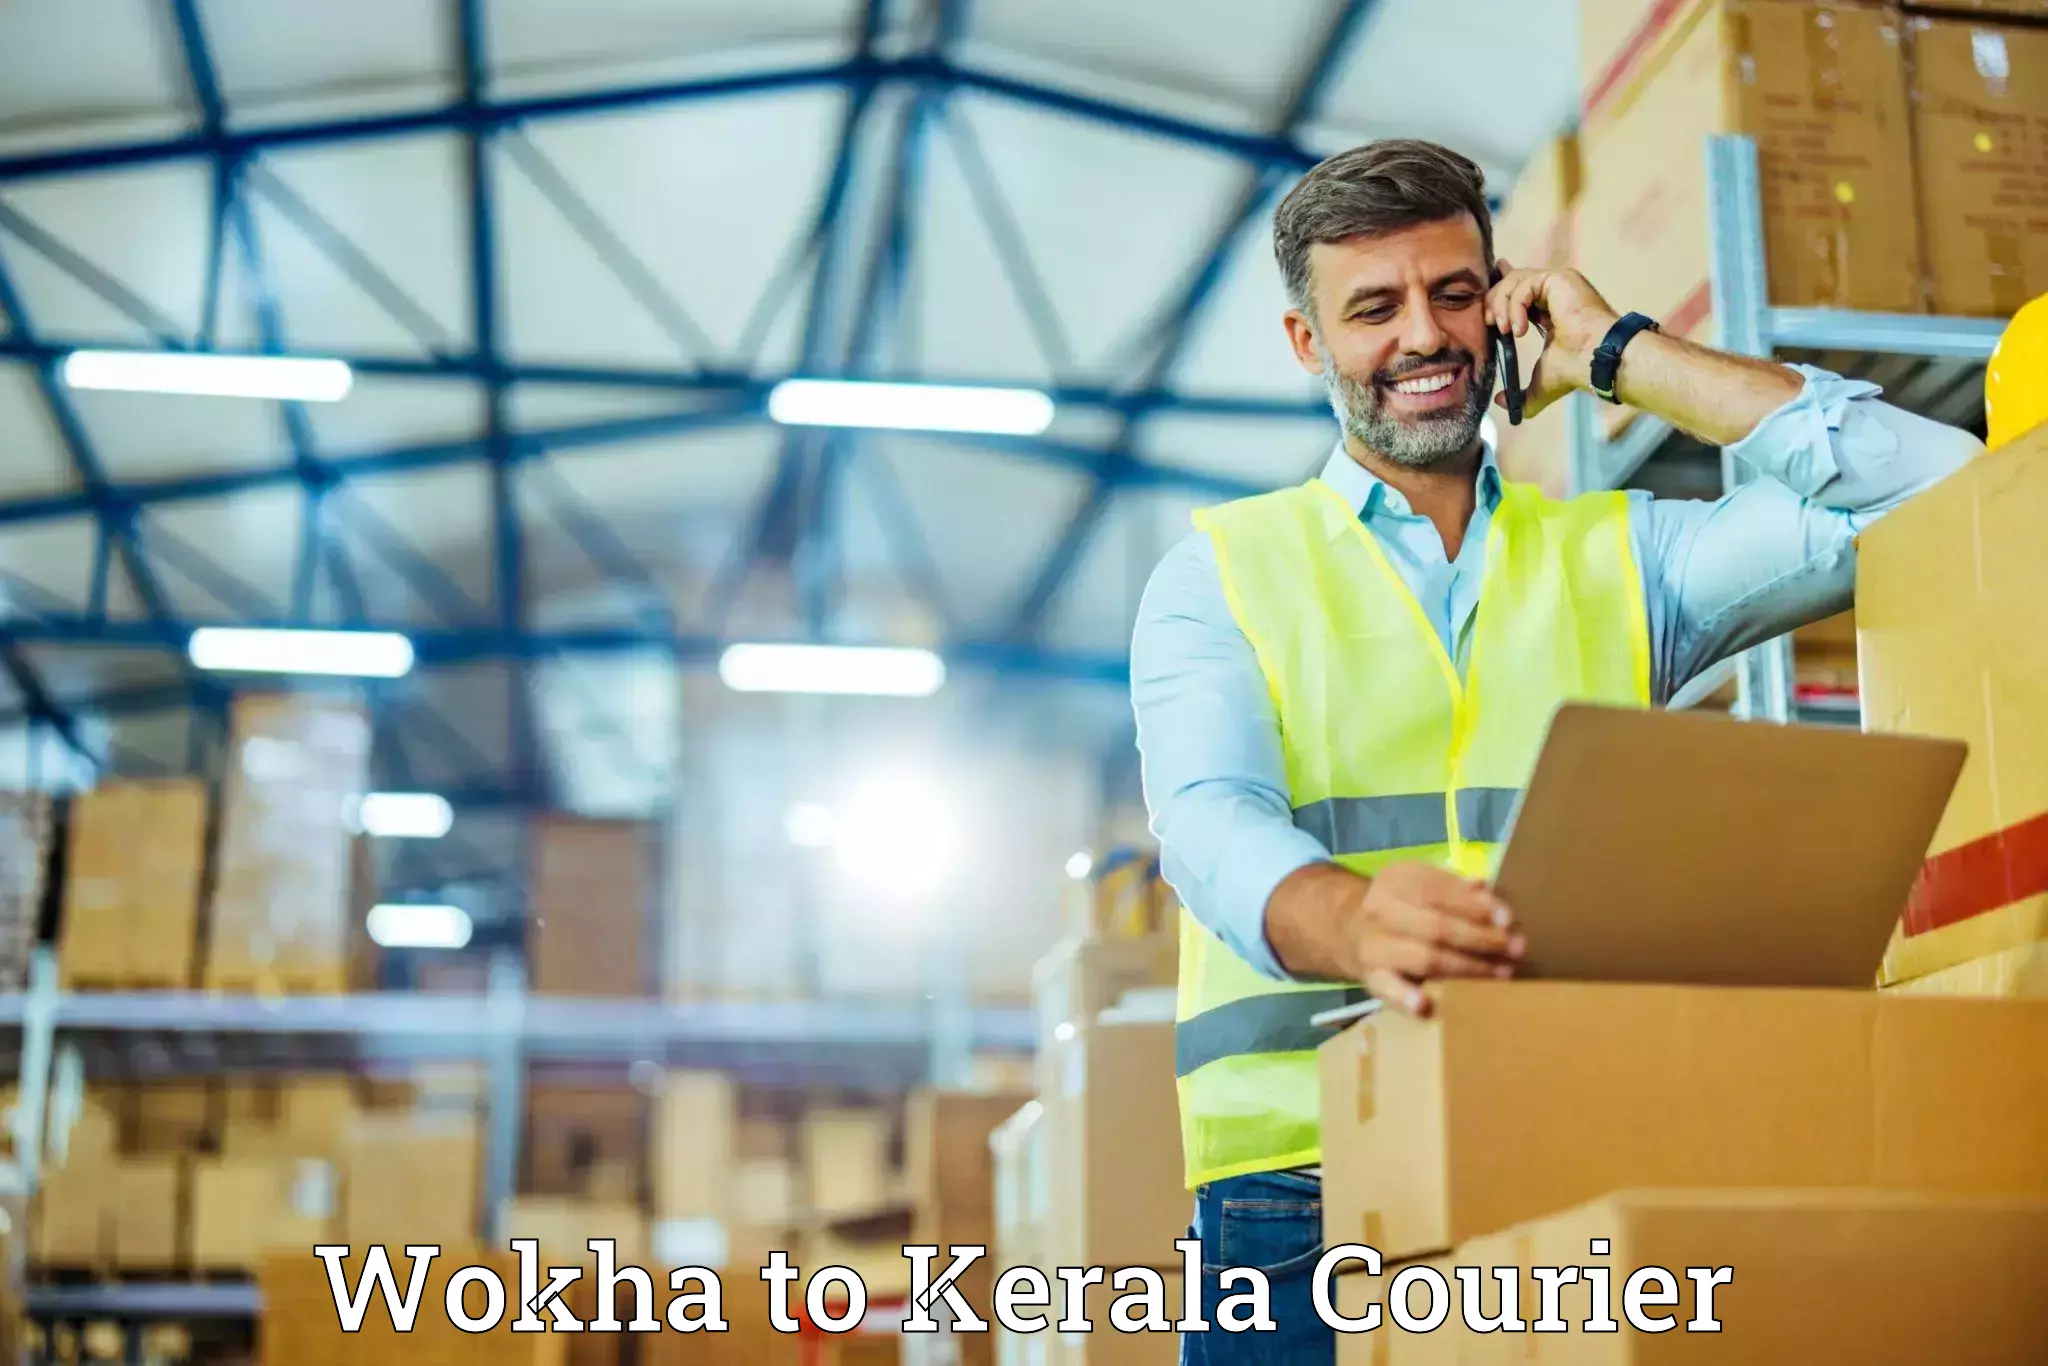 Professional movers and packers Wokha to Kerala